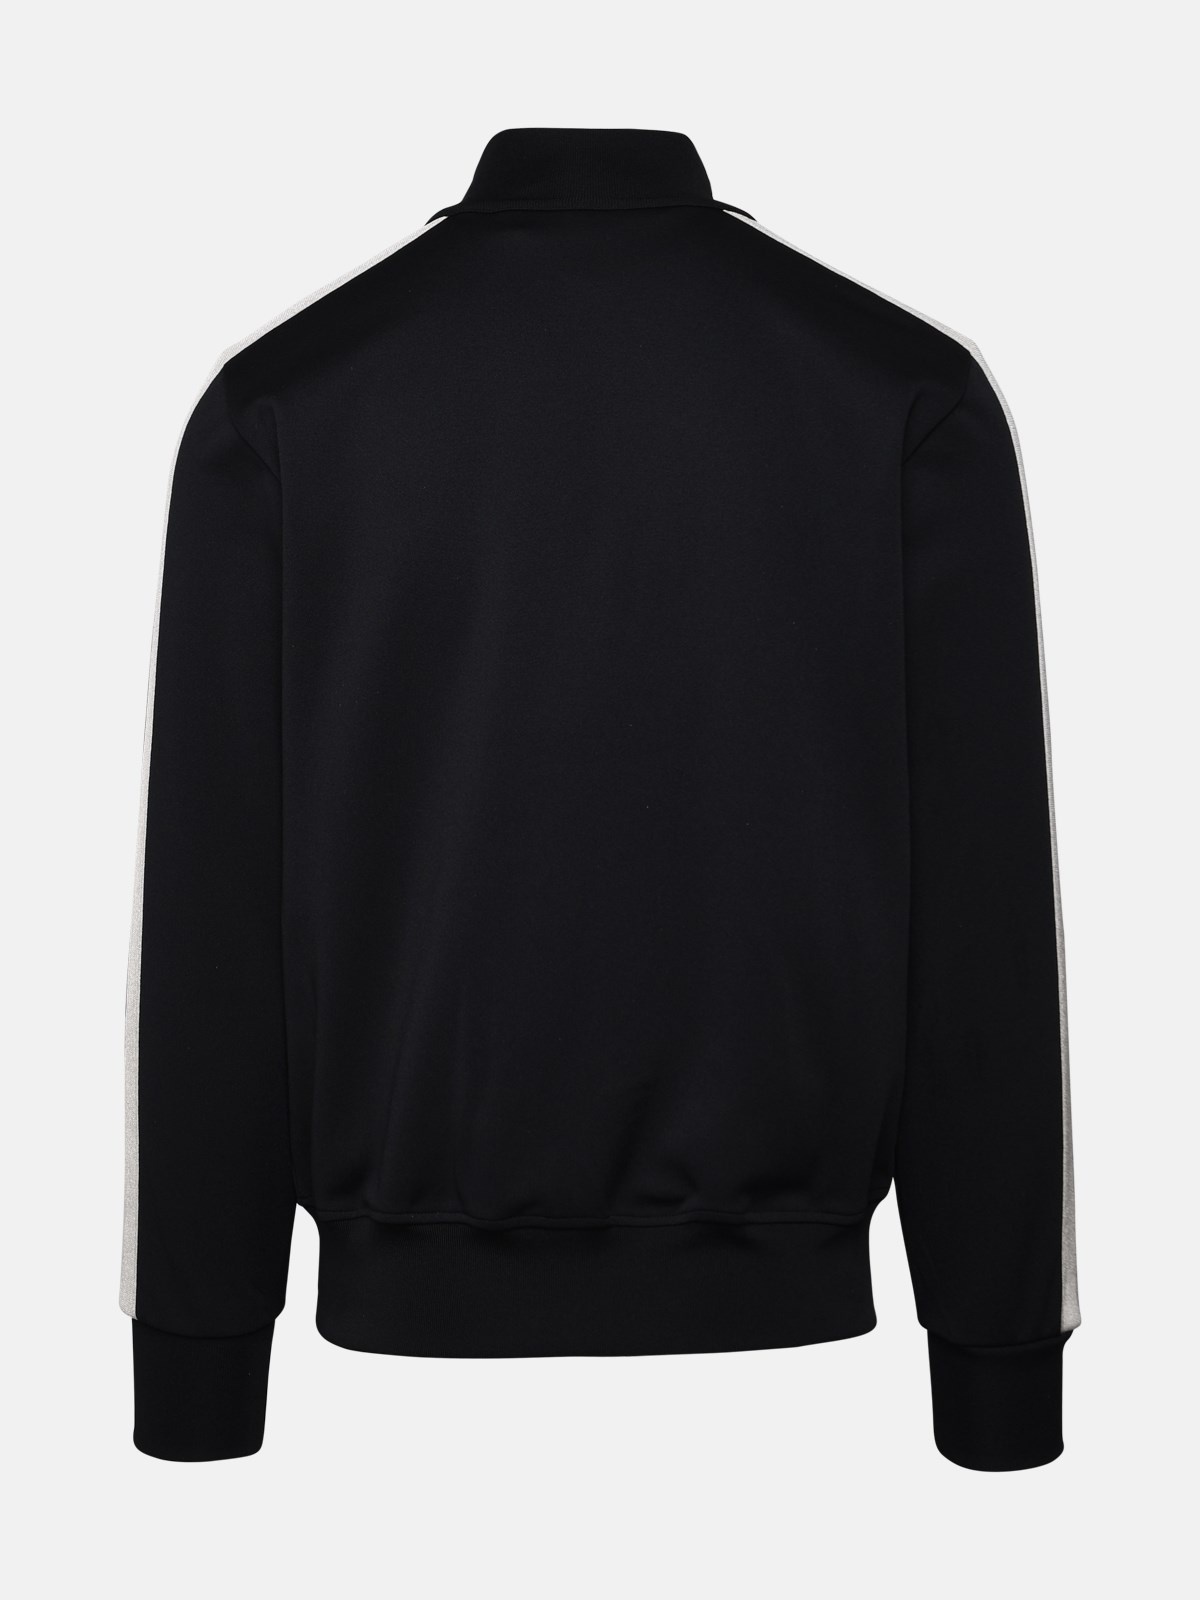 PA Monogram sweatshirt in black polyester - 3